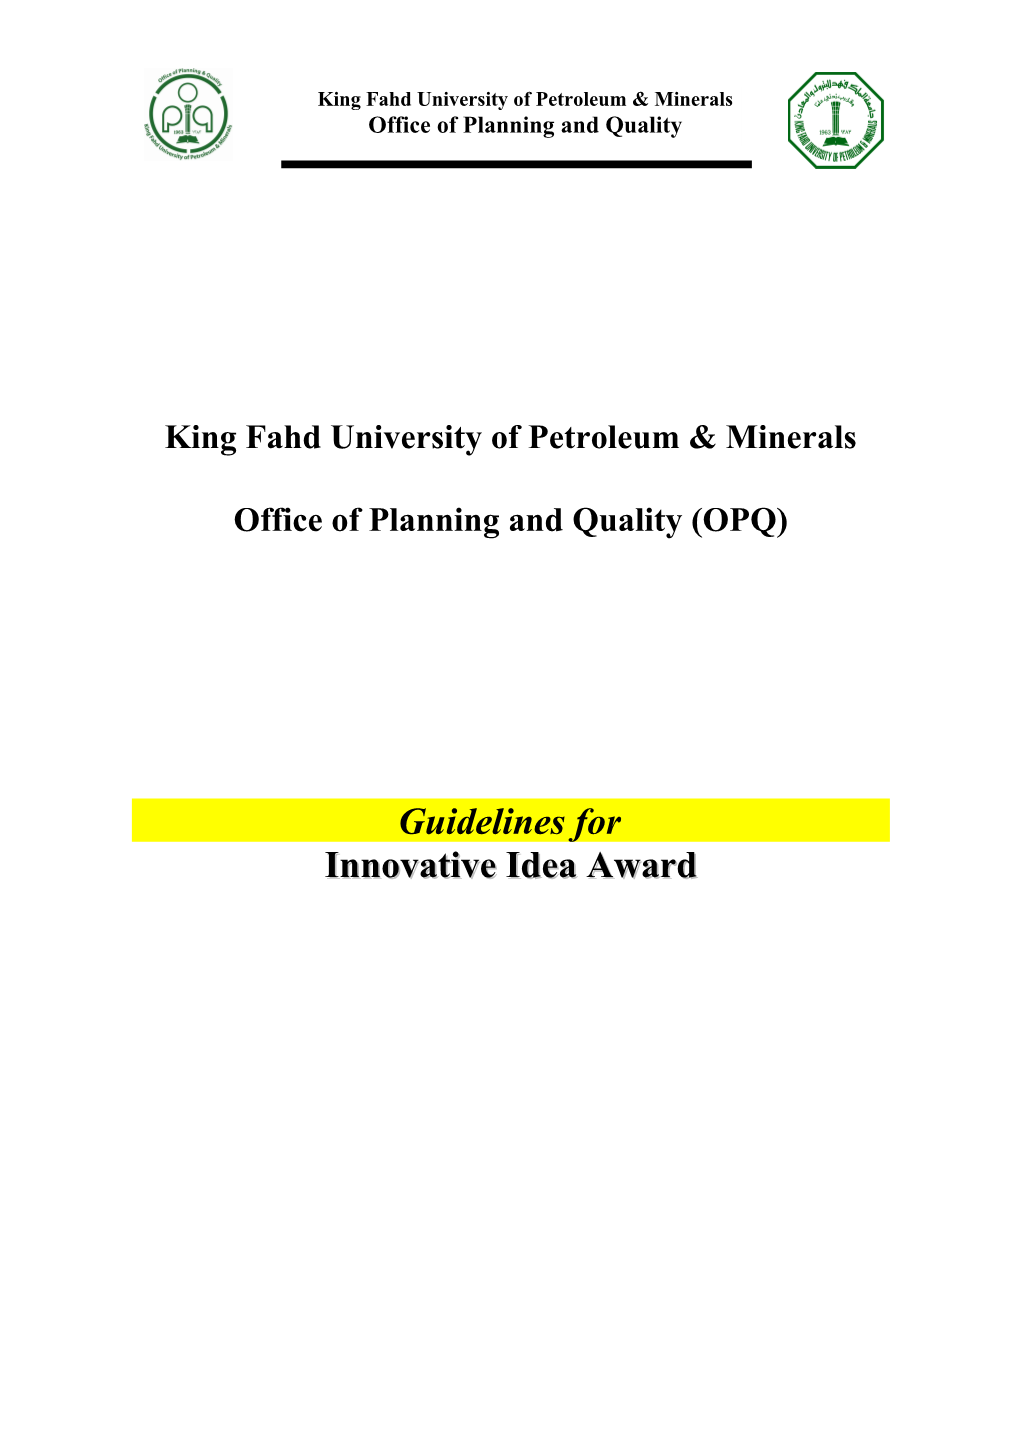 Guidelines for Innovative Idea Award